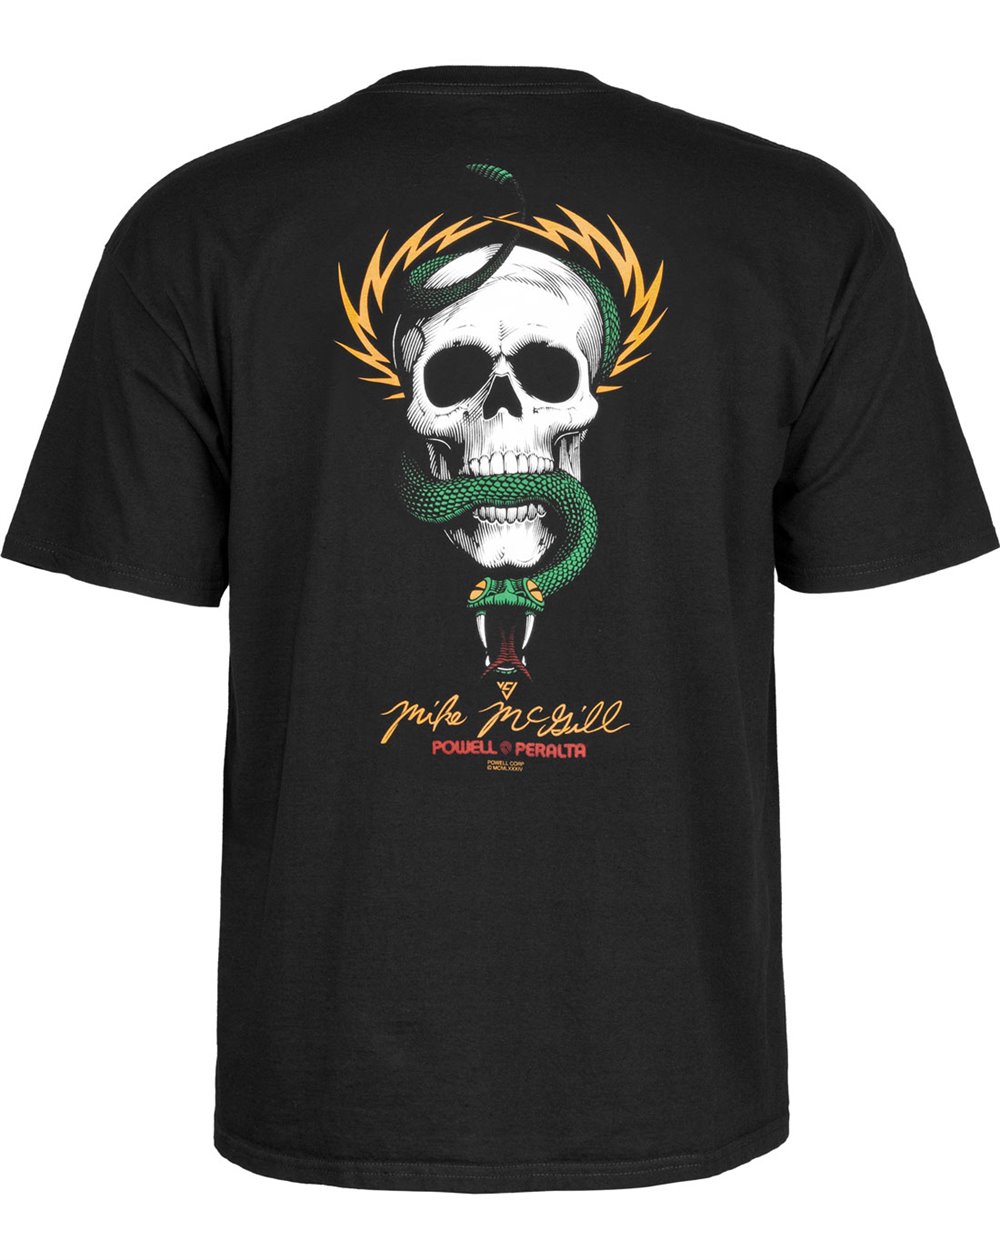 Powell Peralta Mike McGill Skull & Snake Camiseta para Hombre Black